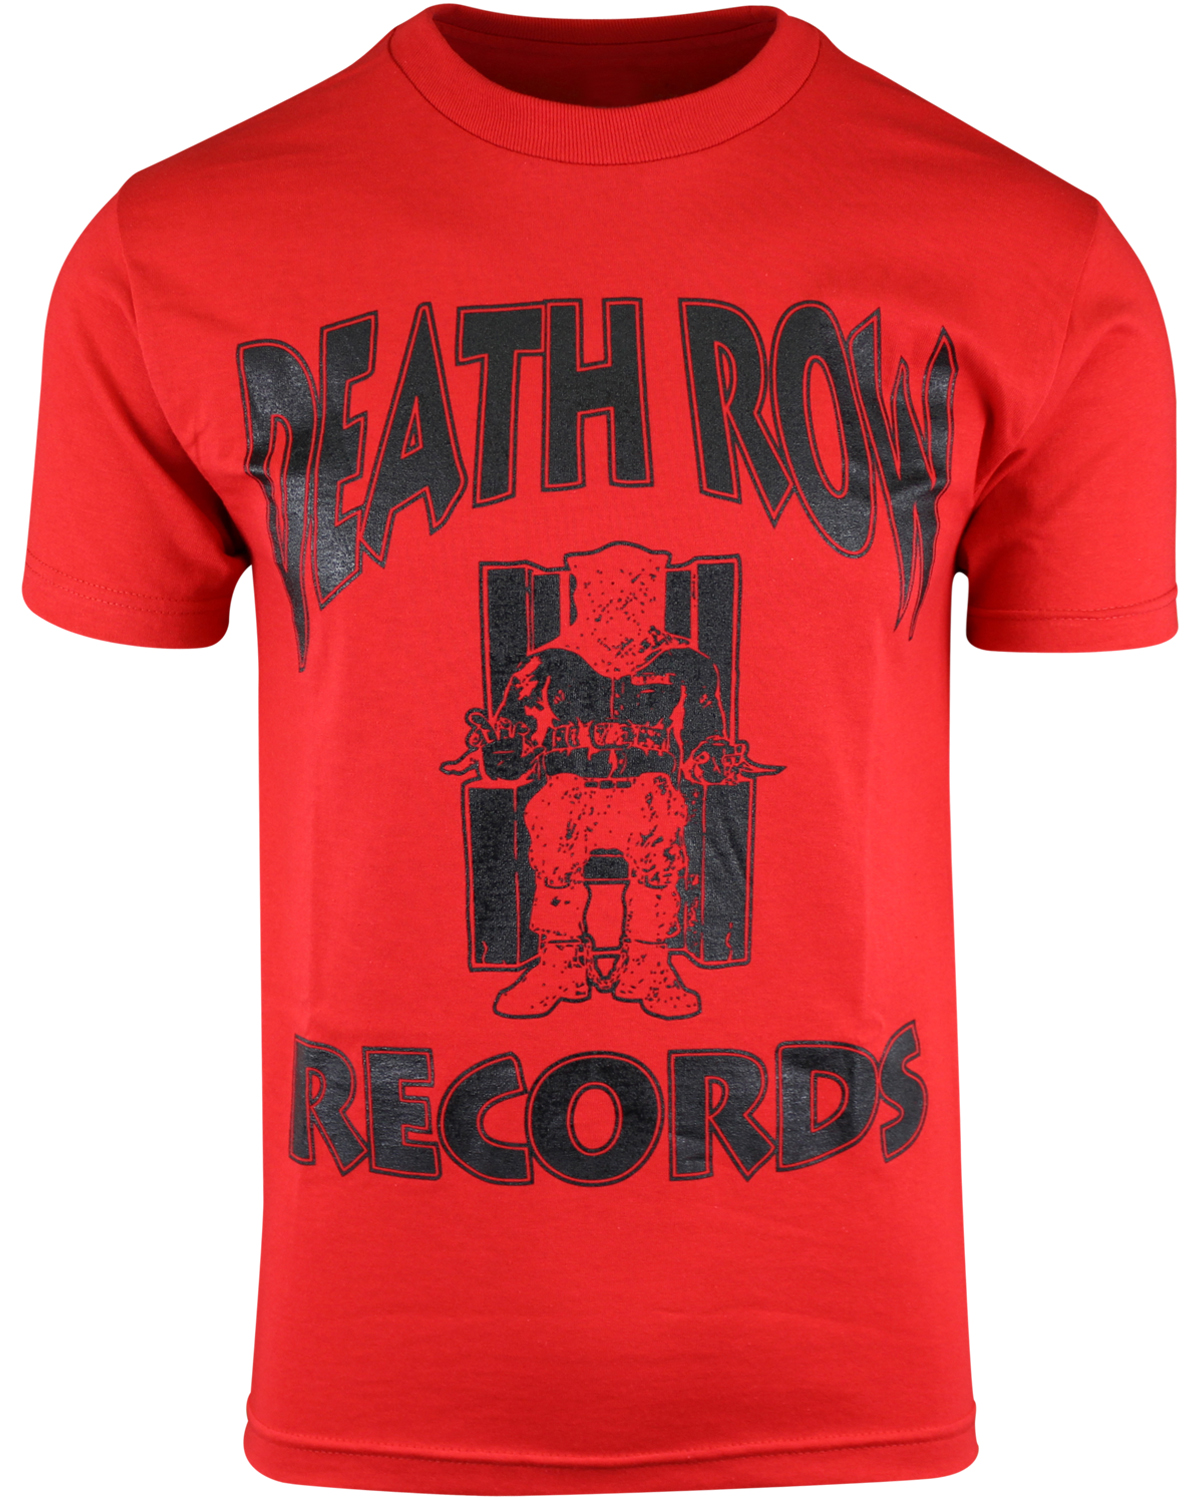 Death Row Records Mens Shirts | eBay